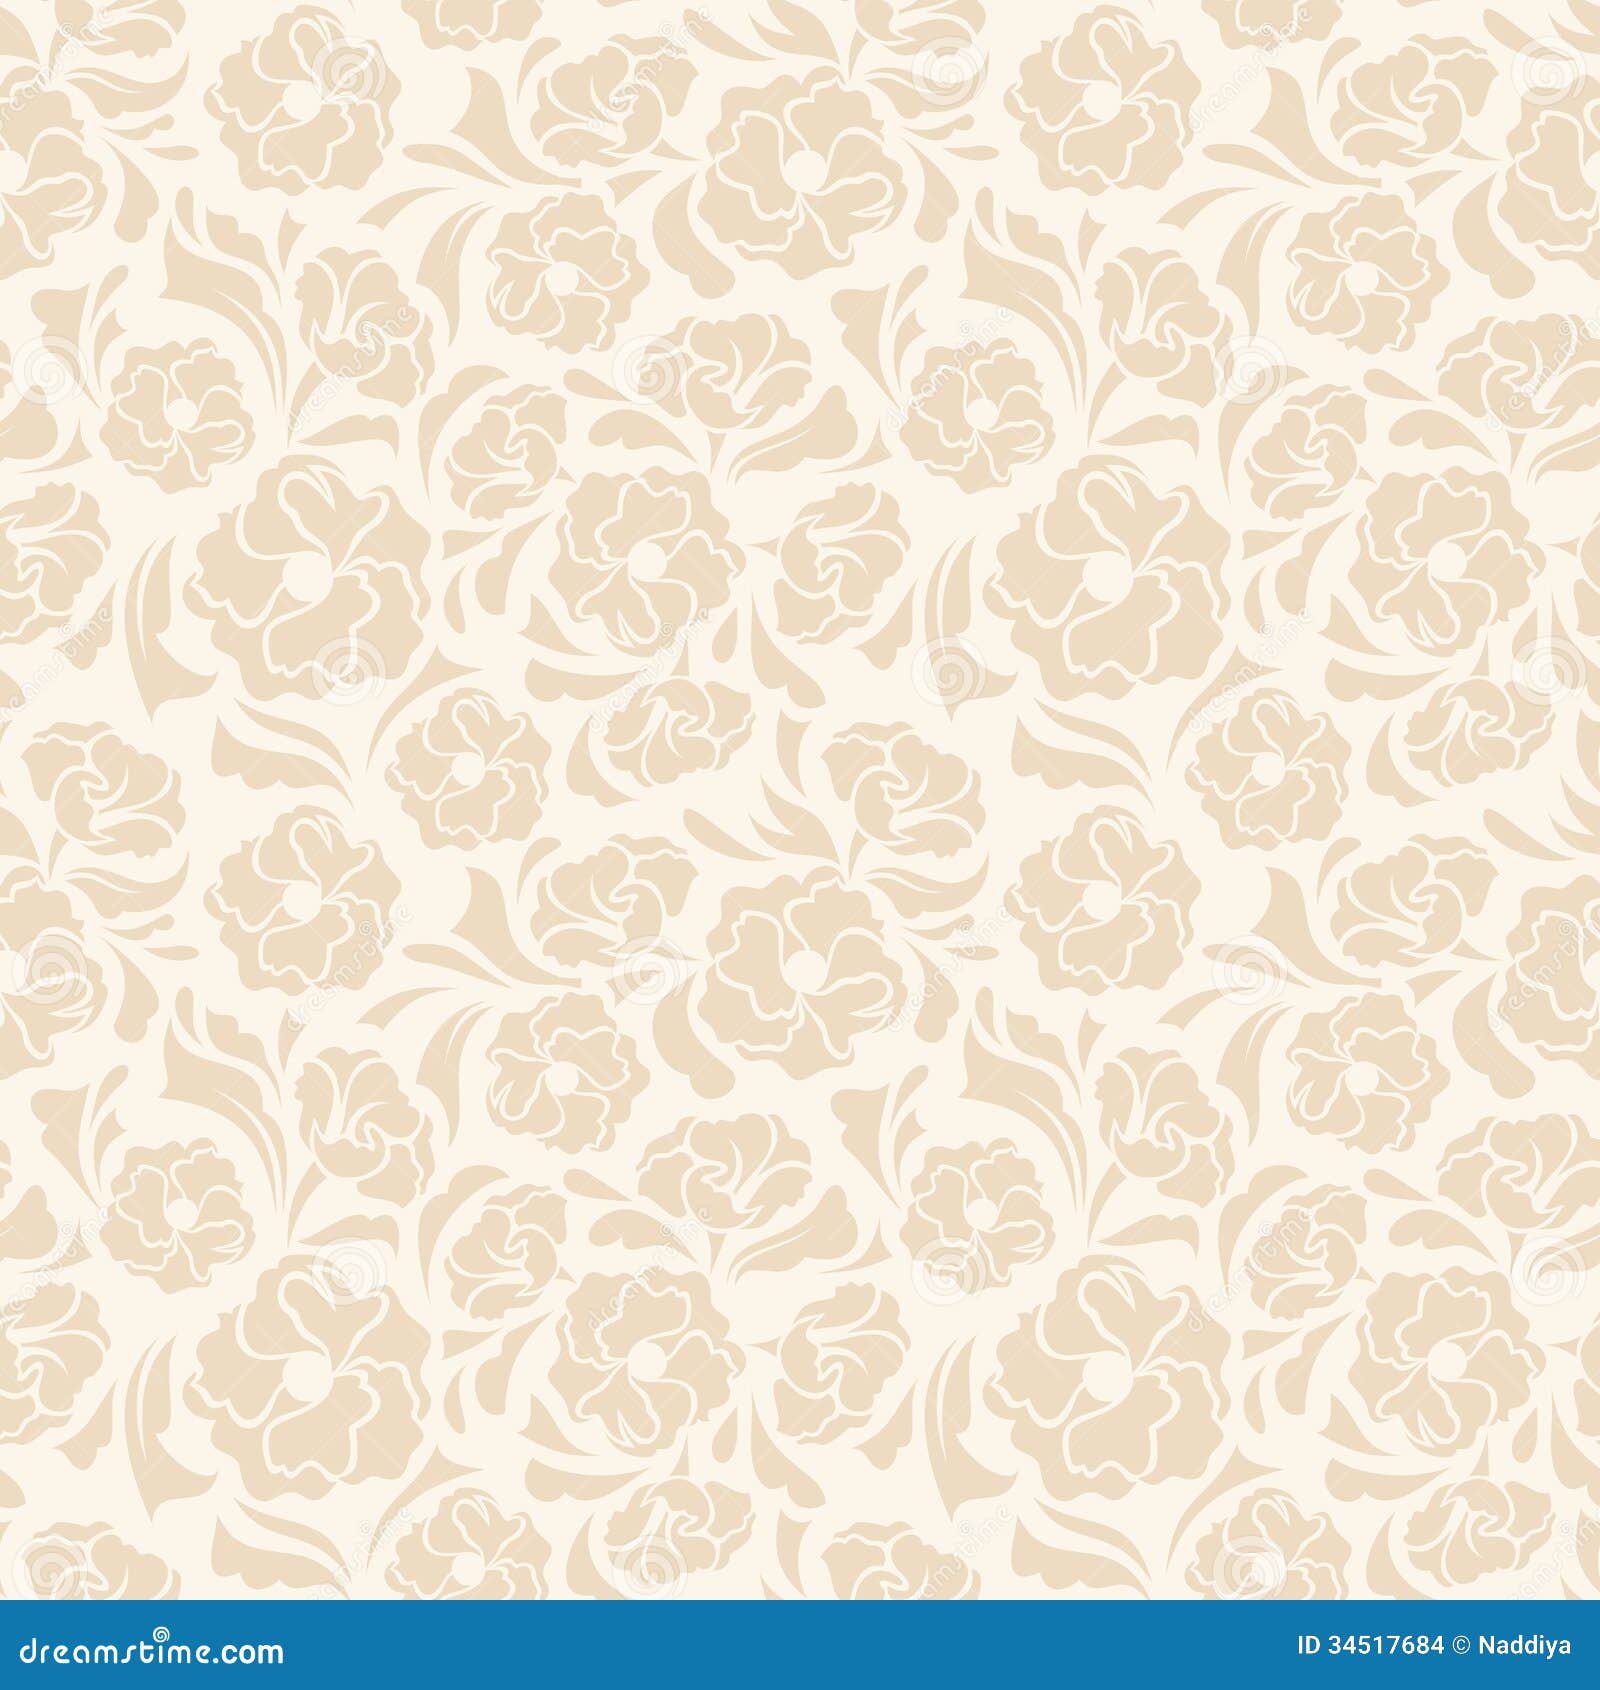 seamless beige floral pattern.